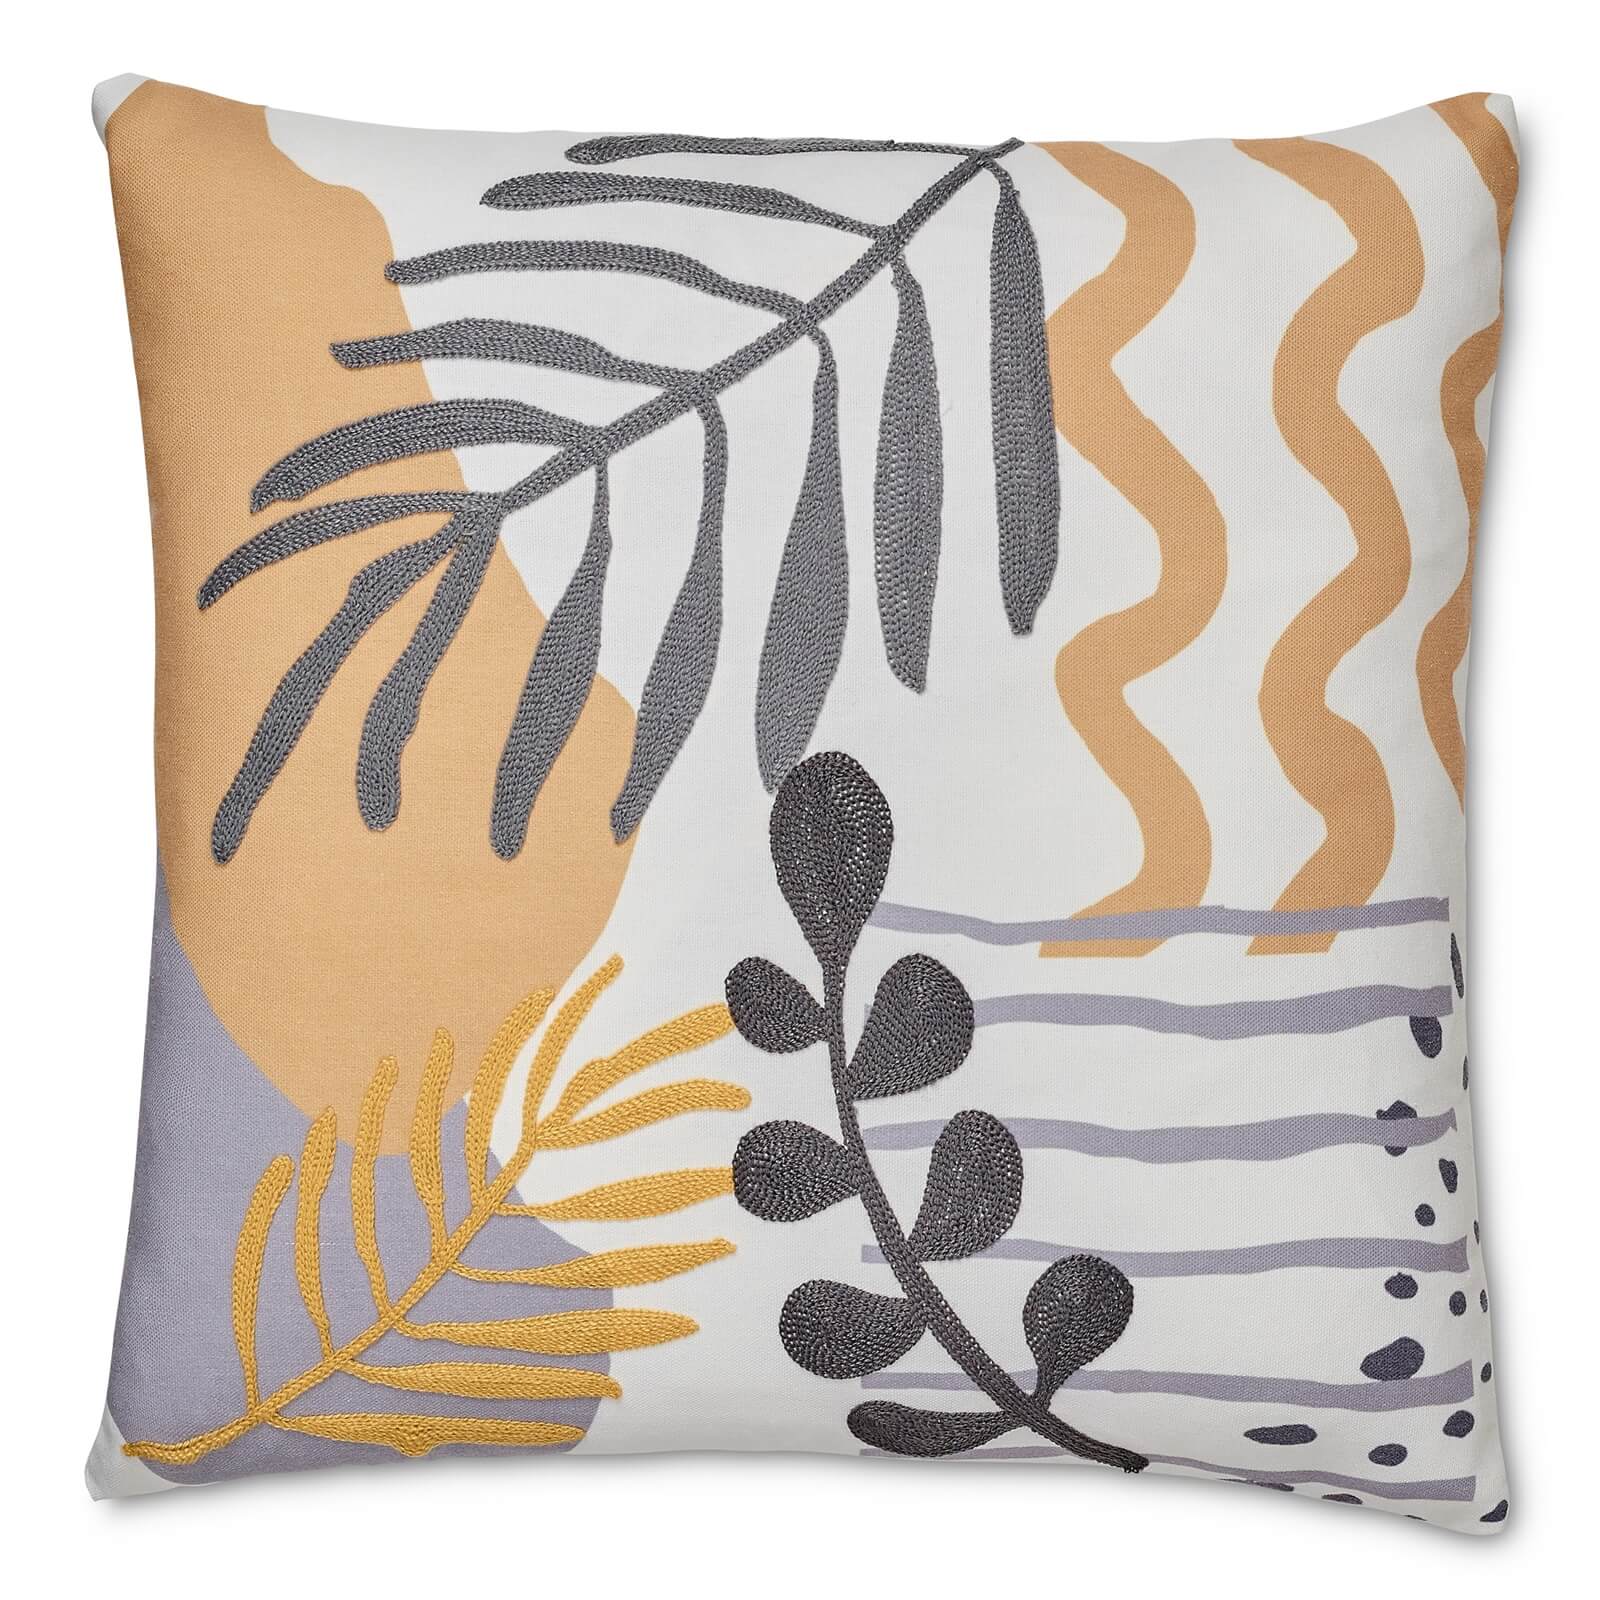 Embroidered and Print Leaf Cushion - Ochre & Grey